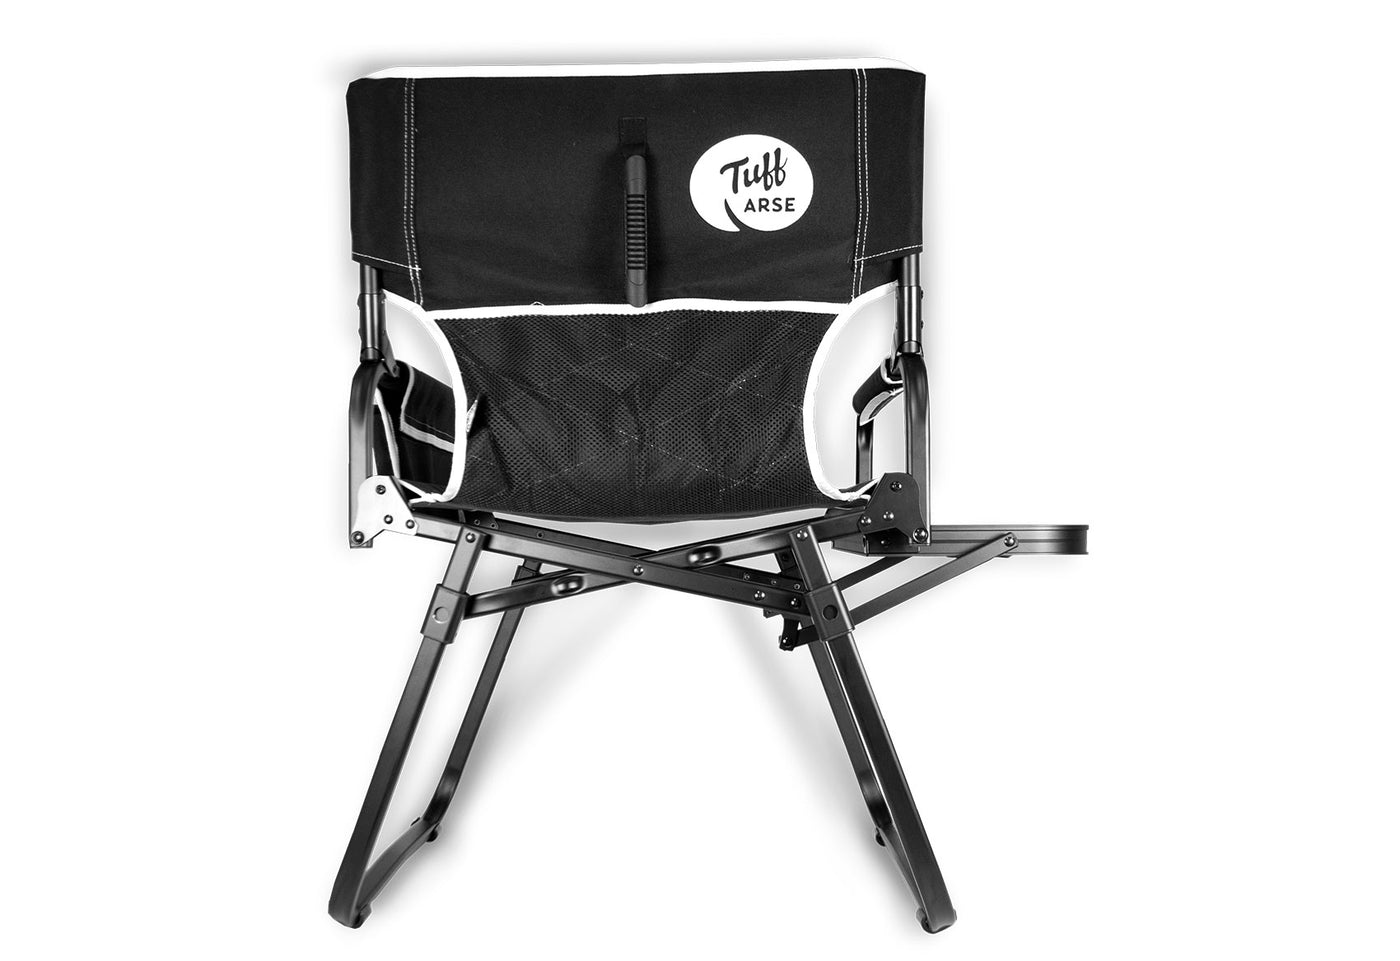 Sling Shot Compact Directors Chair